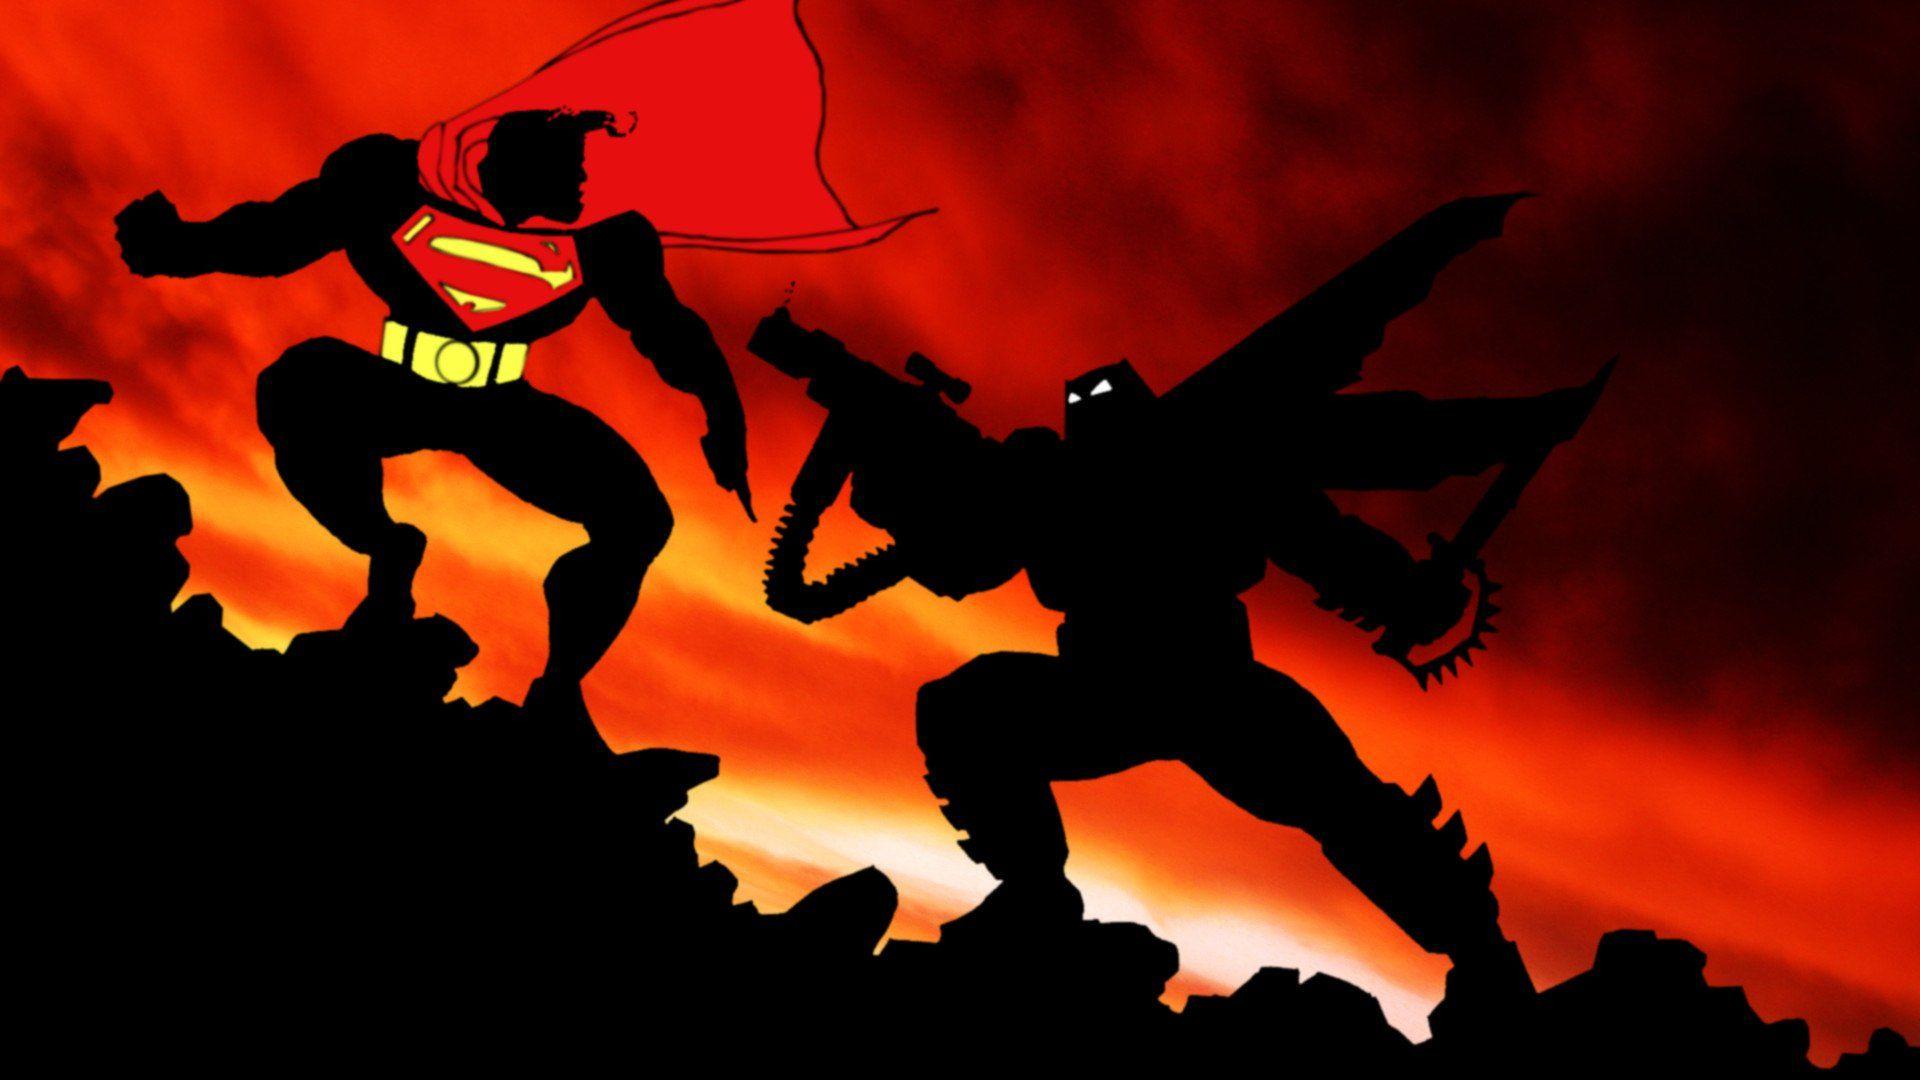 Batman: The Dark Knight Returns Full HD Wallpaper and Background